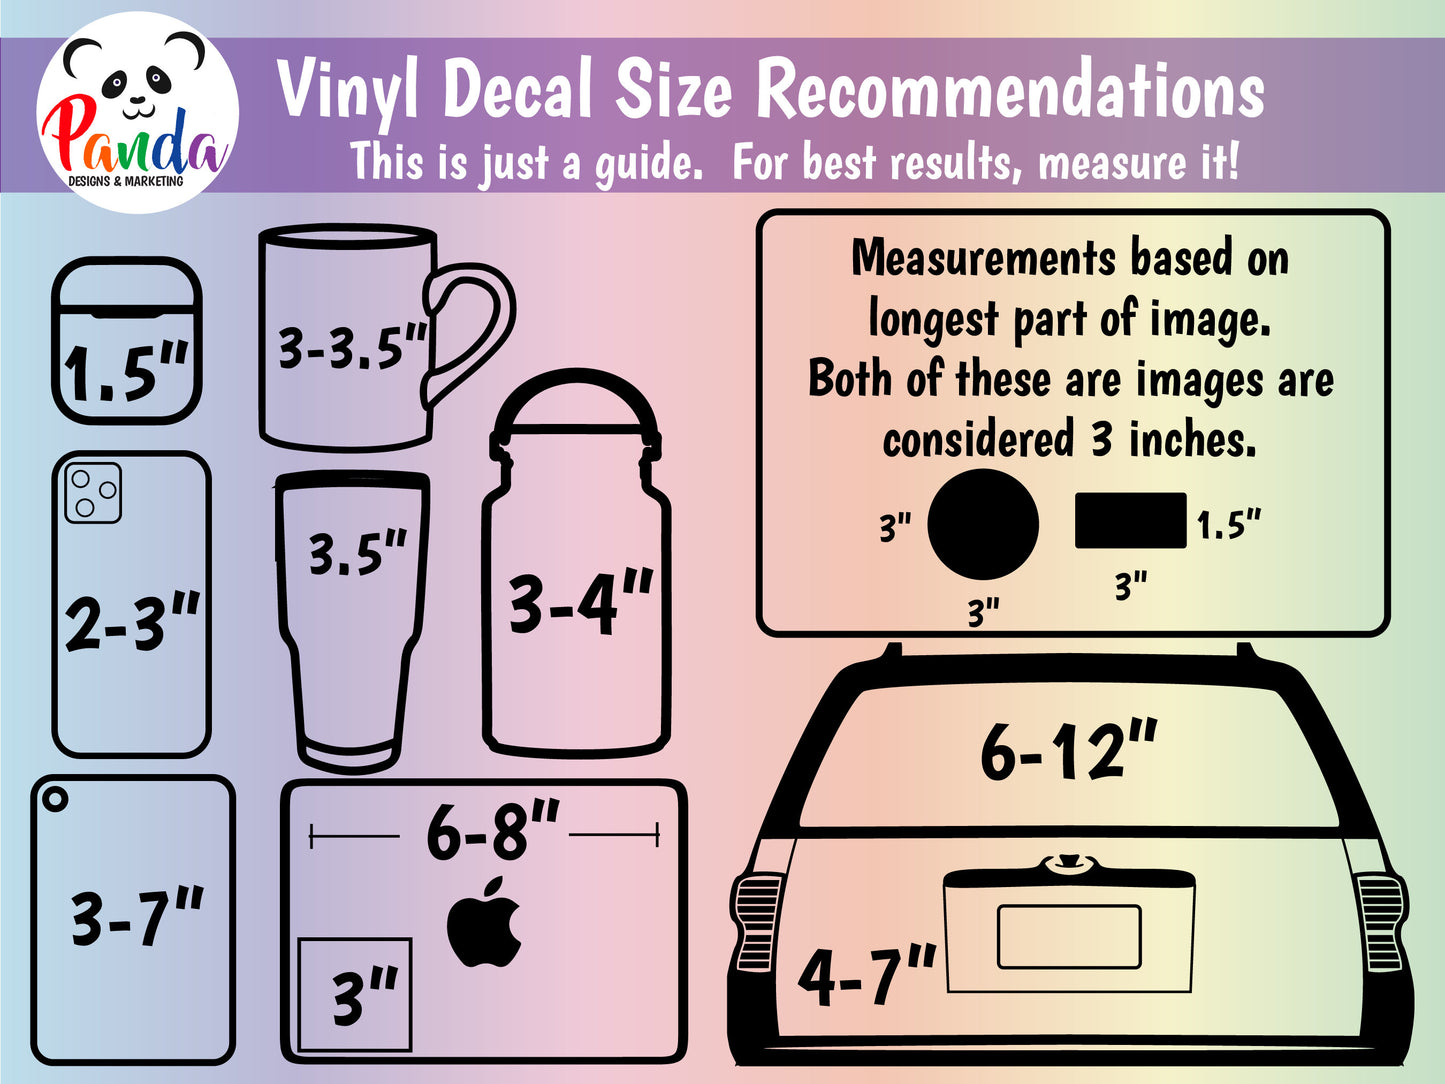 Vinyl Decal Size Recommendations chart. Phones: 3", Tumblers 2-3", Laptop 3-8", Car bumper 4-7", Car window 6-12"